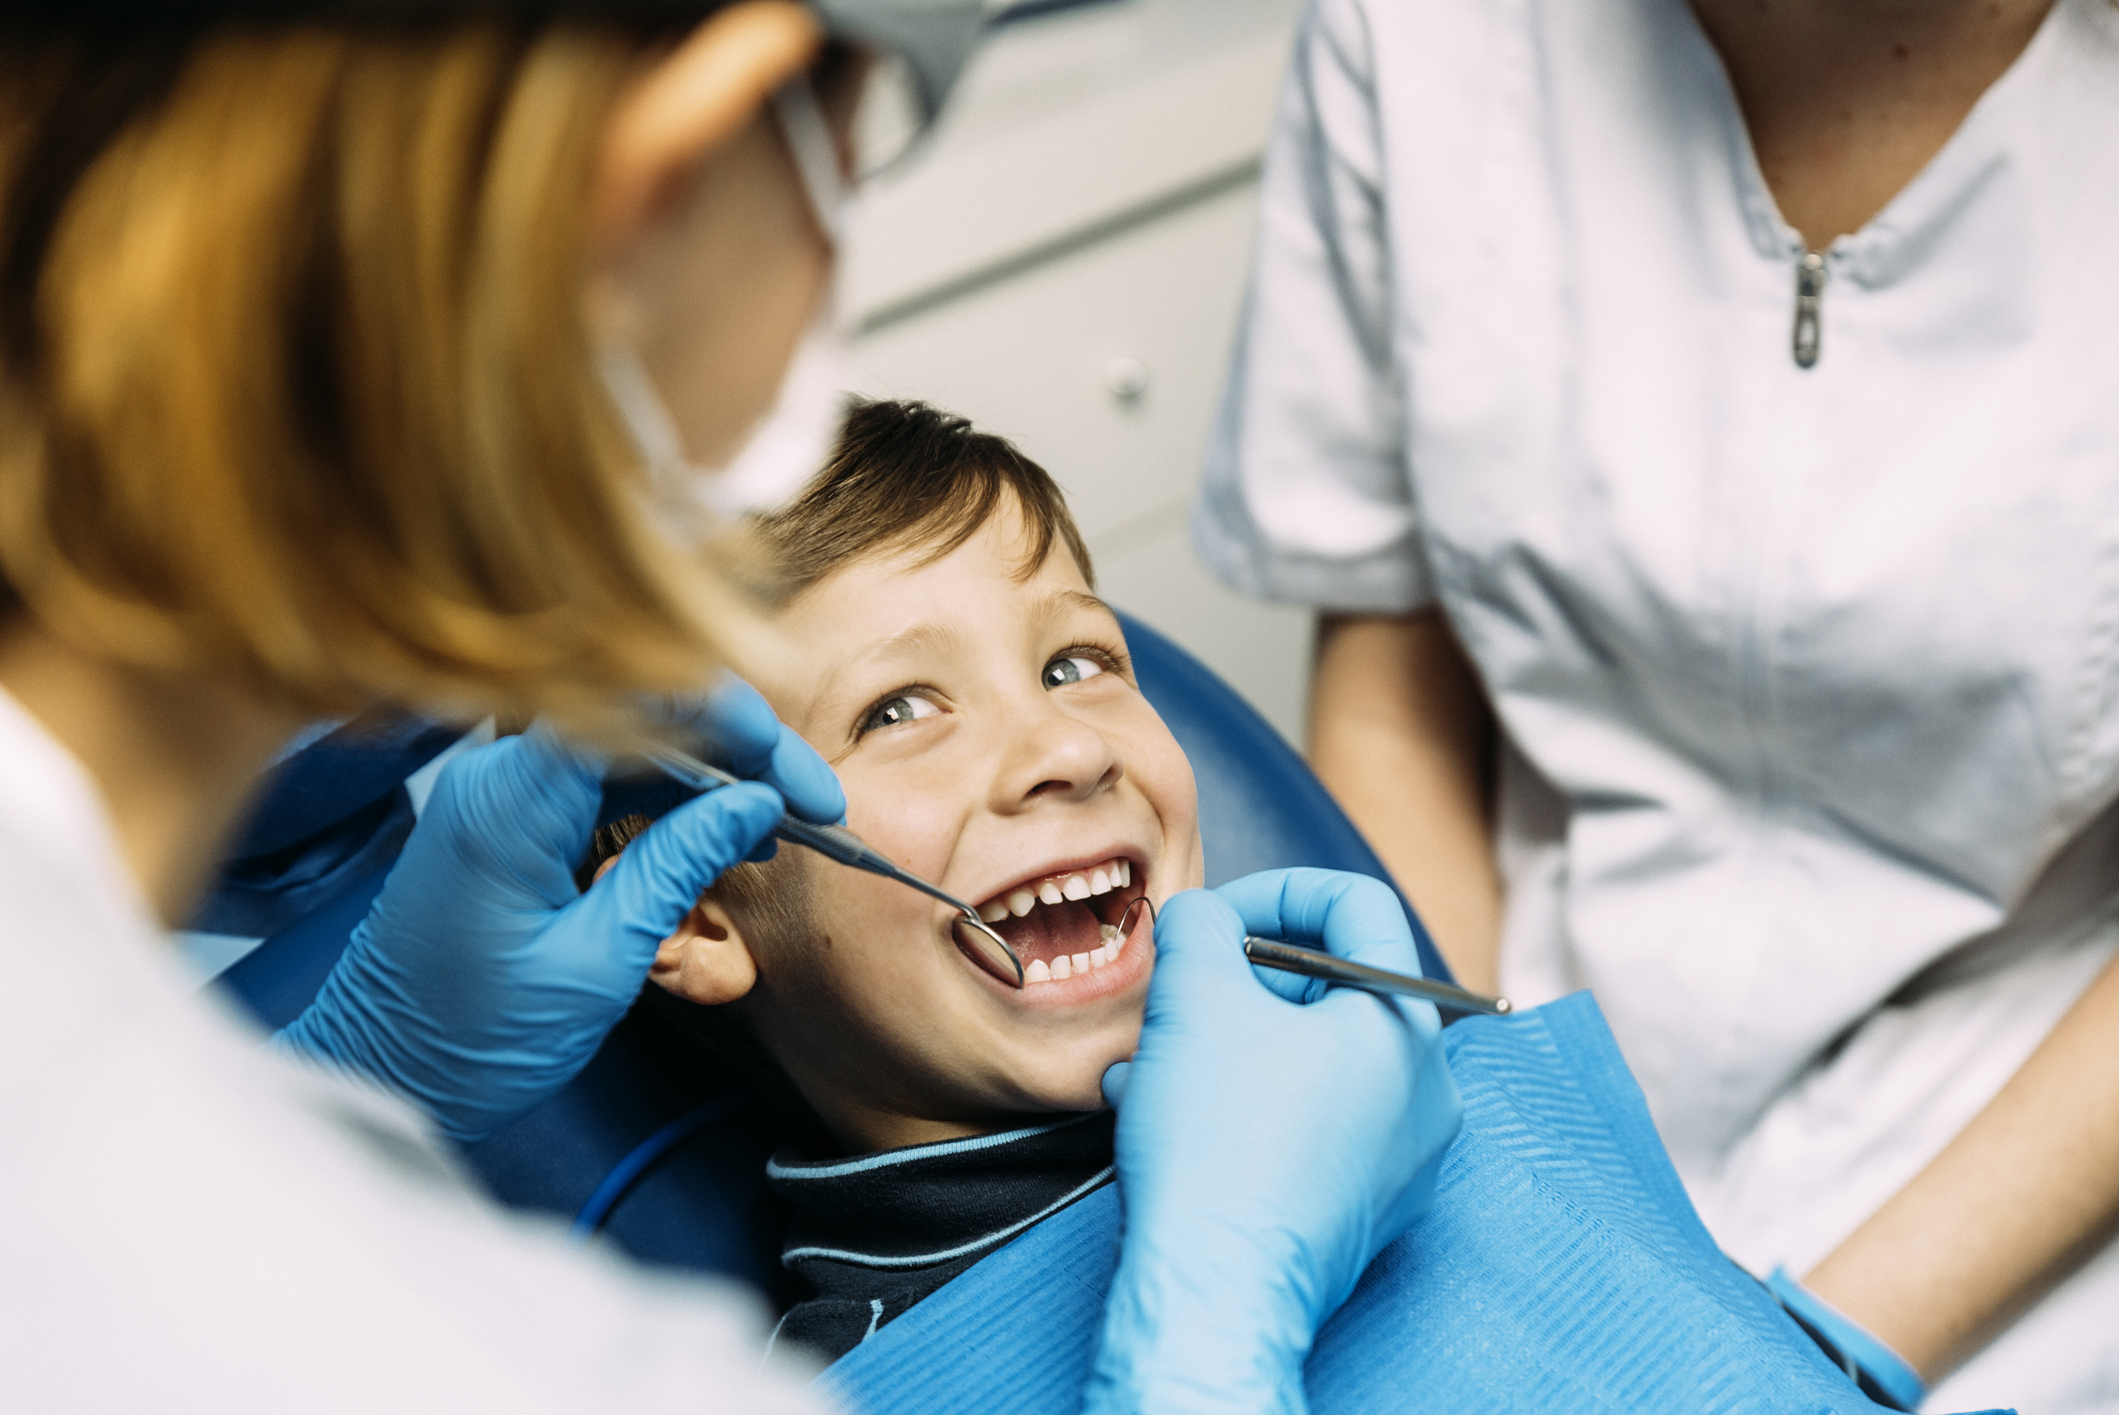 Dentist Pass: 40 ευρώ για κάθε παιδί – Τον Μάιο οι αιτήσεις στο gov.gr